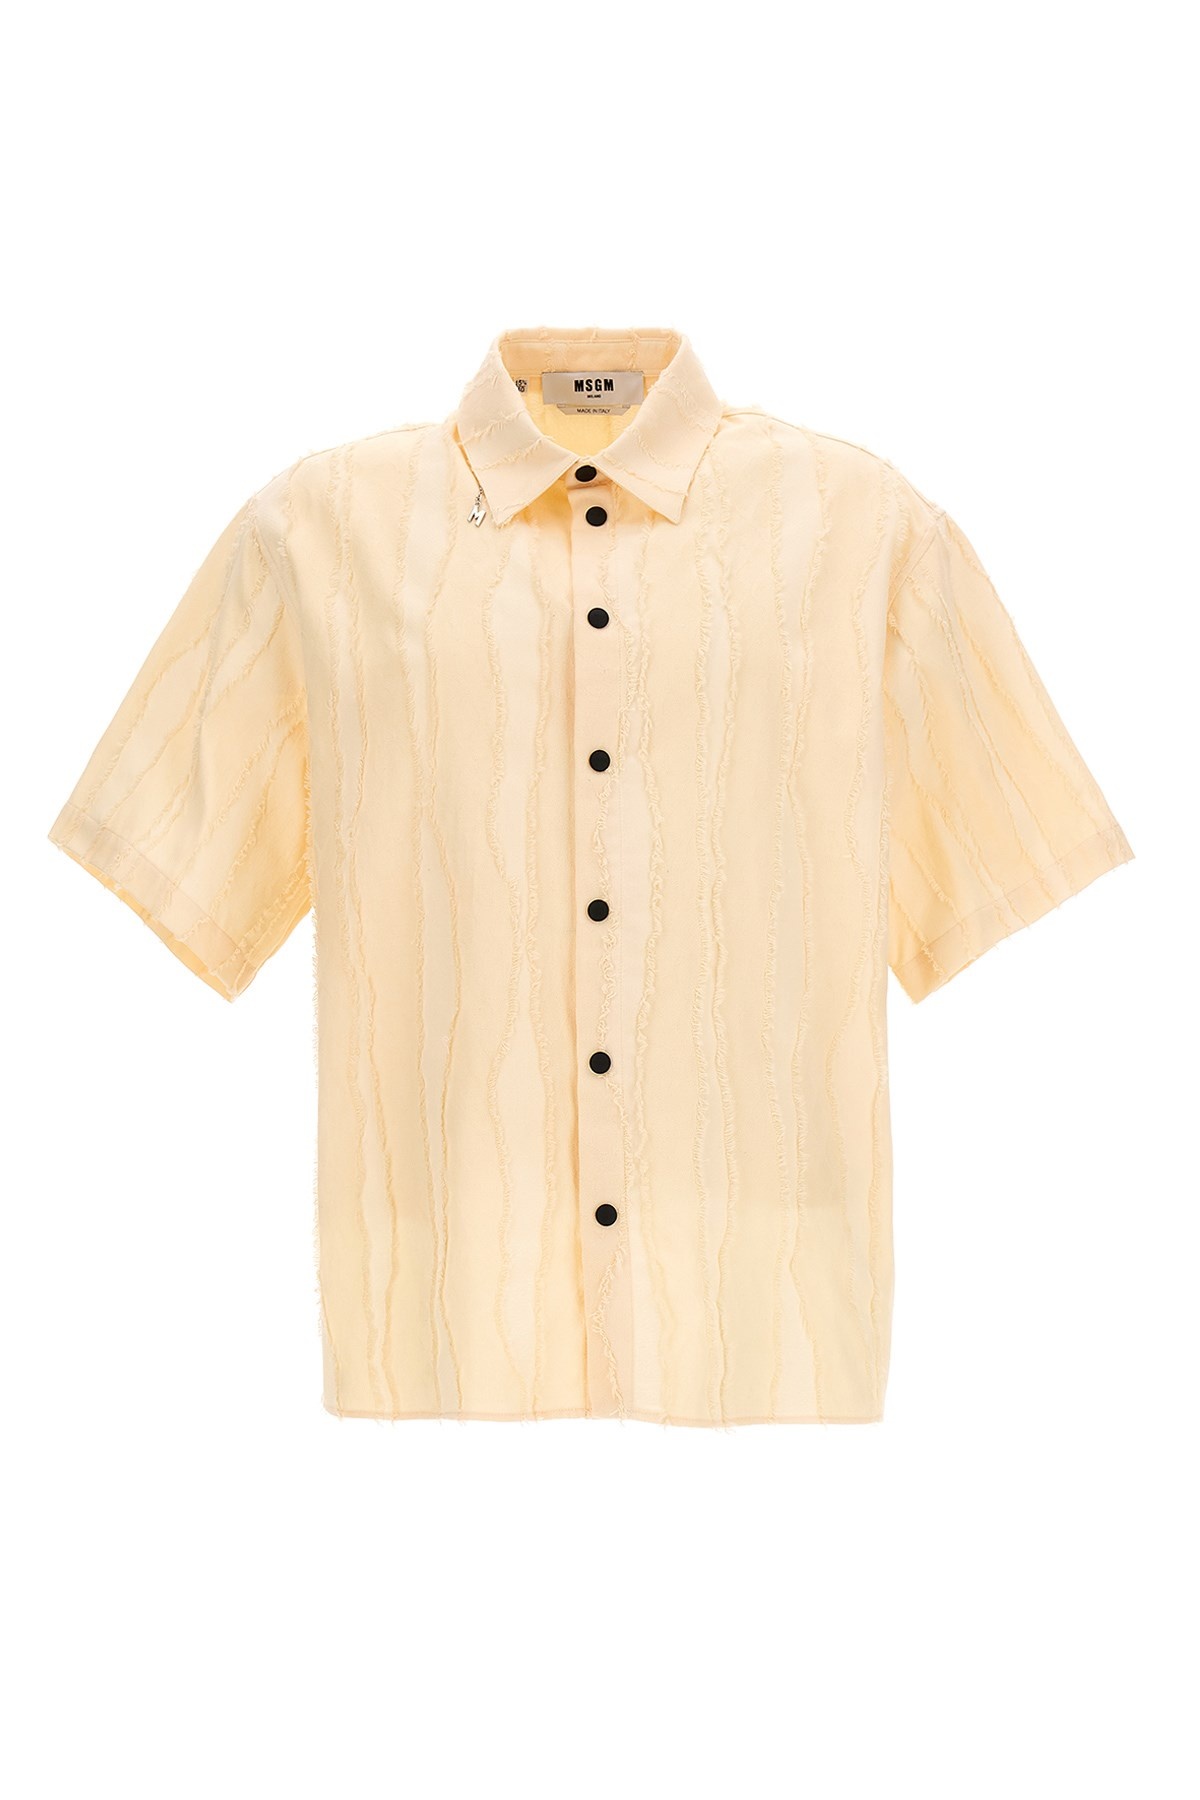 Fil coupe cotton shirt - 1